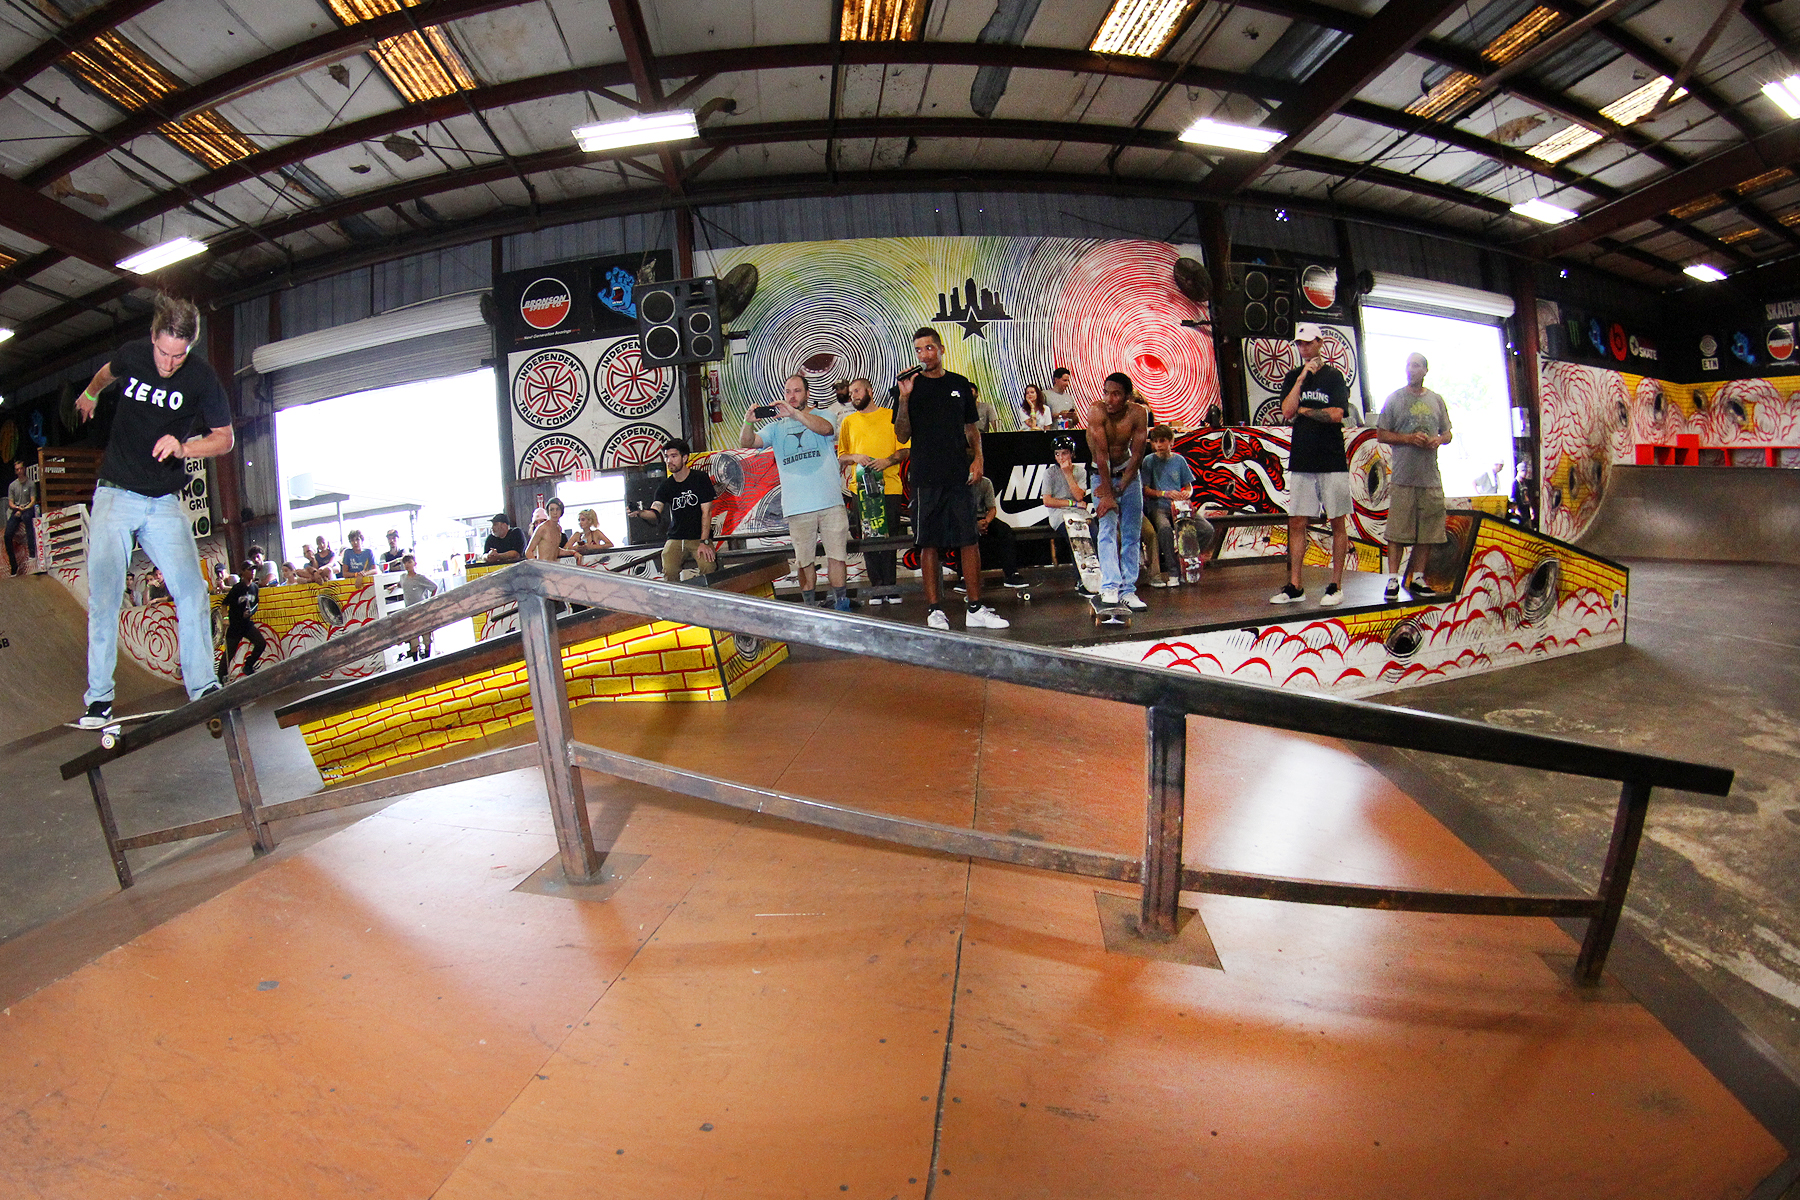 Nike SB Go Skateboarding Day - Tampa Photos